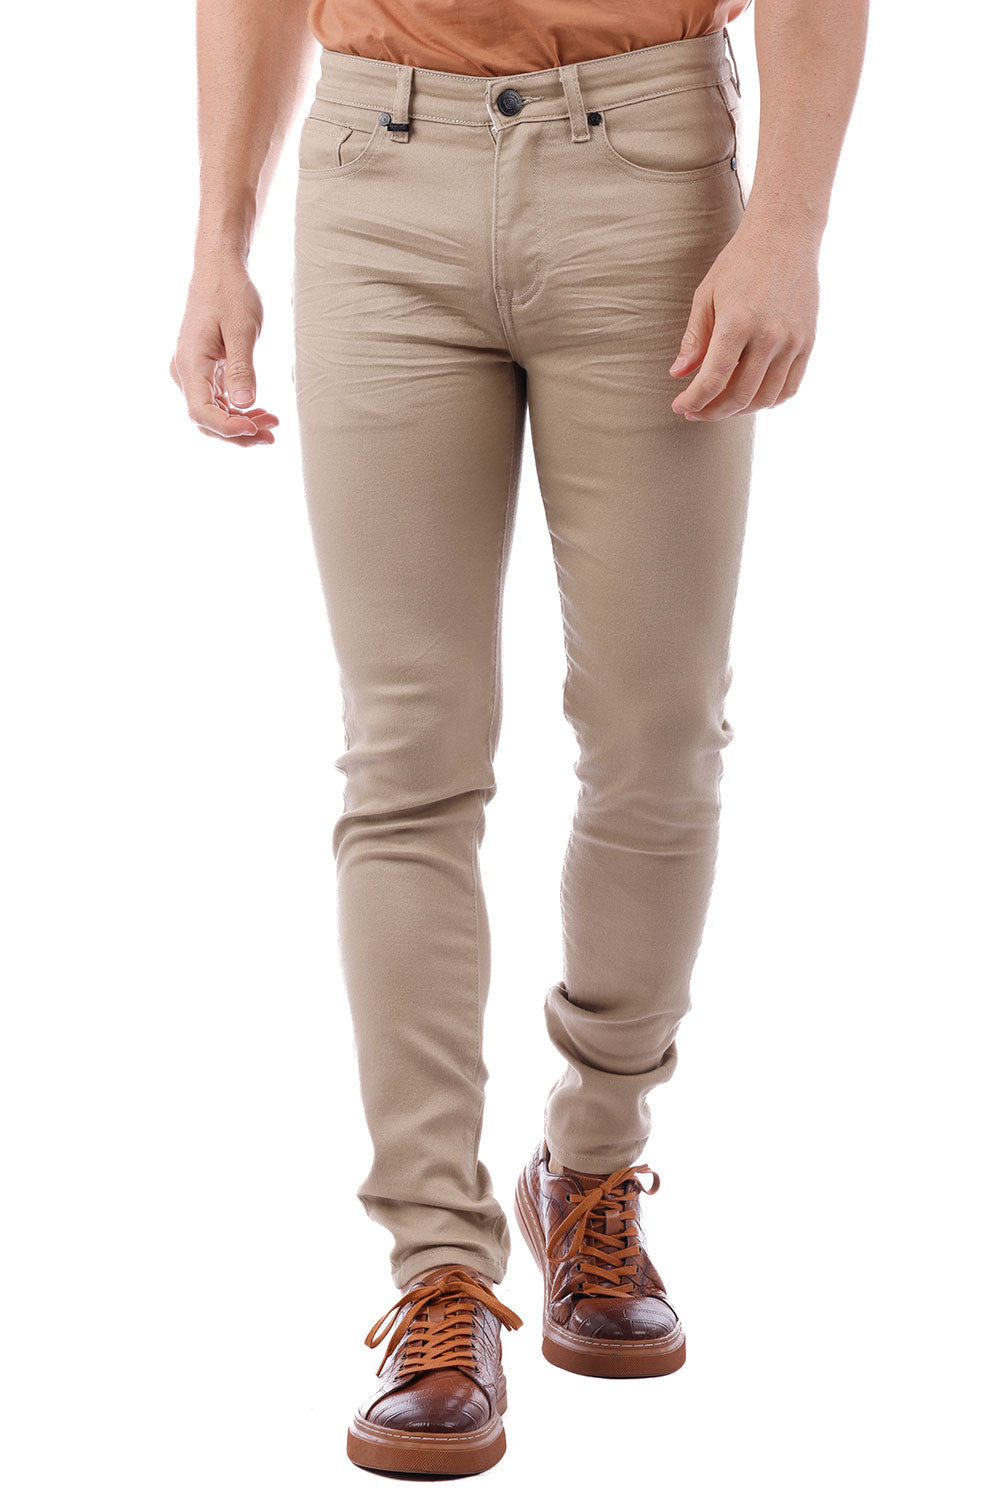 Barabas Men's Skinny Fit Classic Denim Solid Color Jeans 1700 Khaki